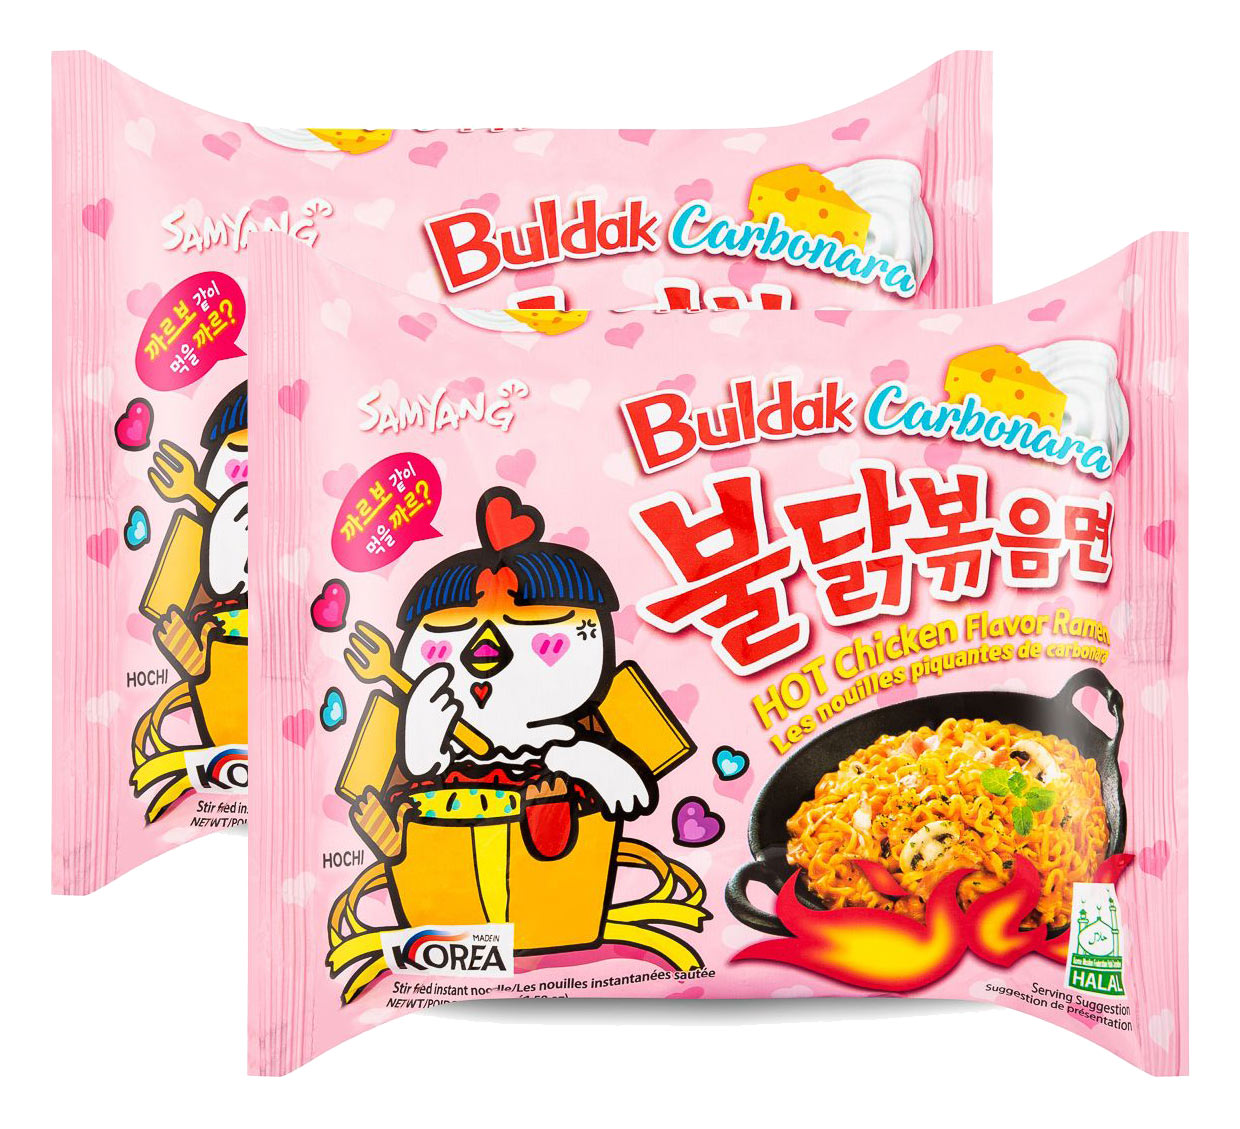 Samyang Buldak Jjampong Flavor Spicy Hot Ramen Noodles – Shadow Anime